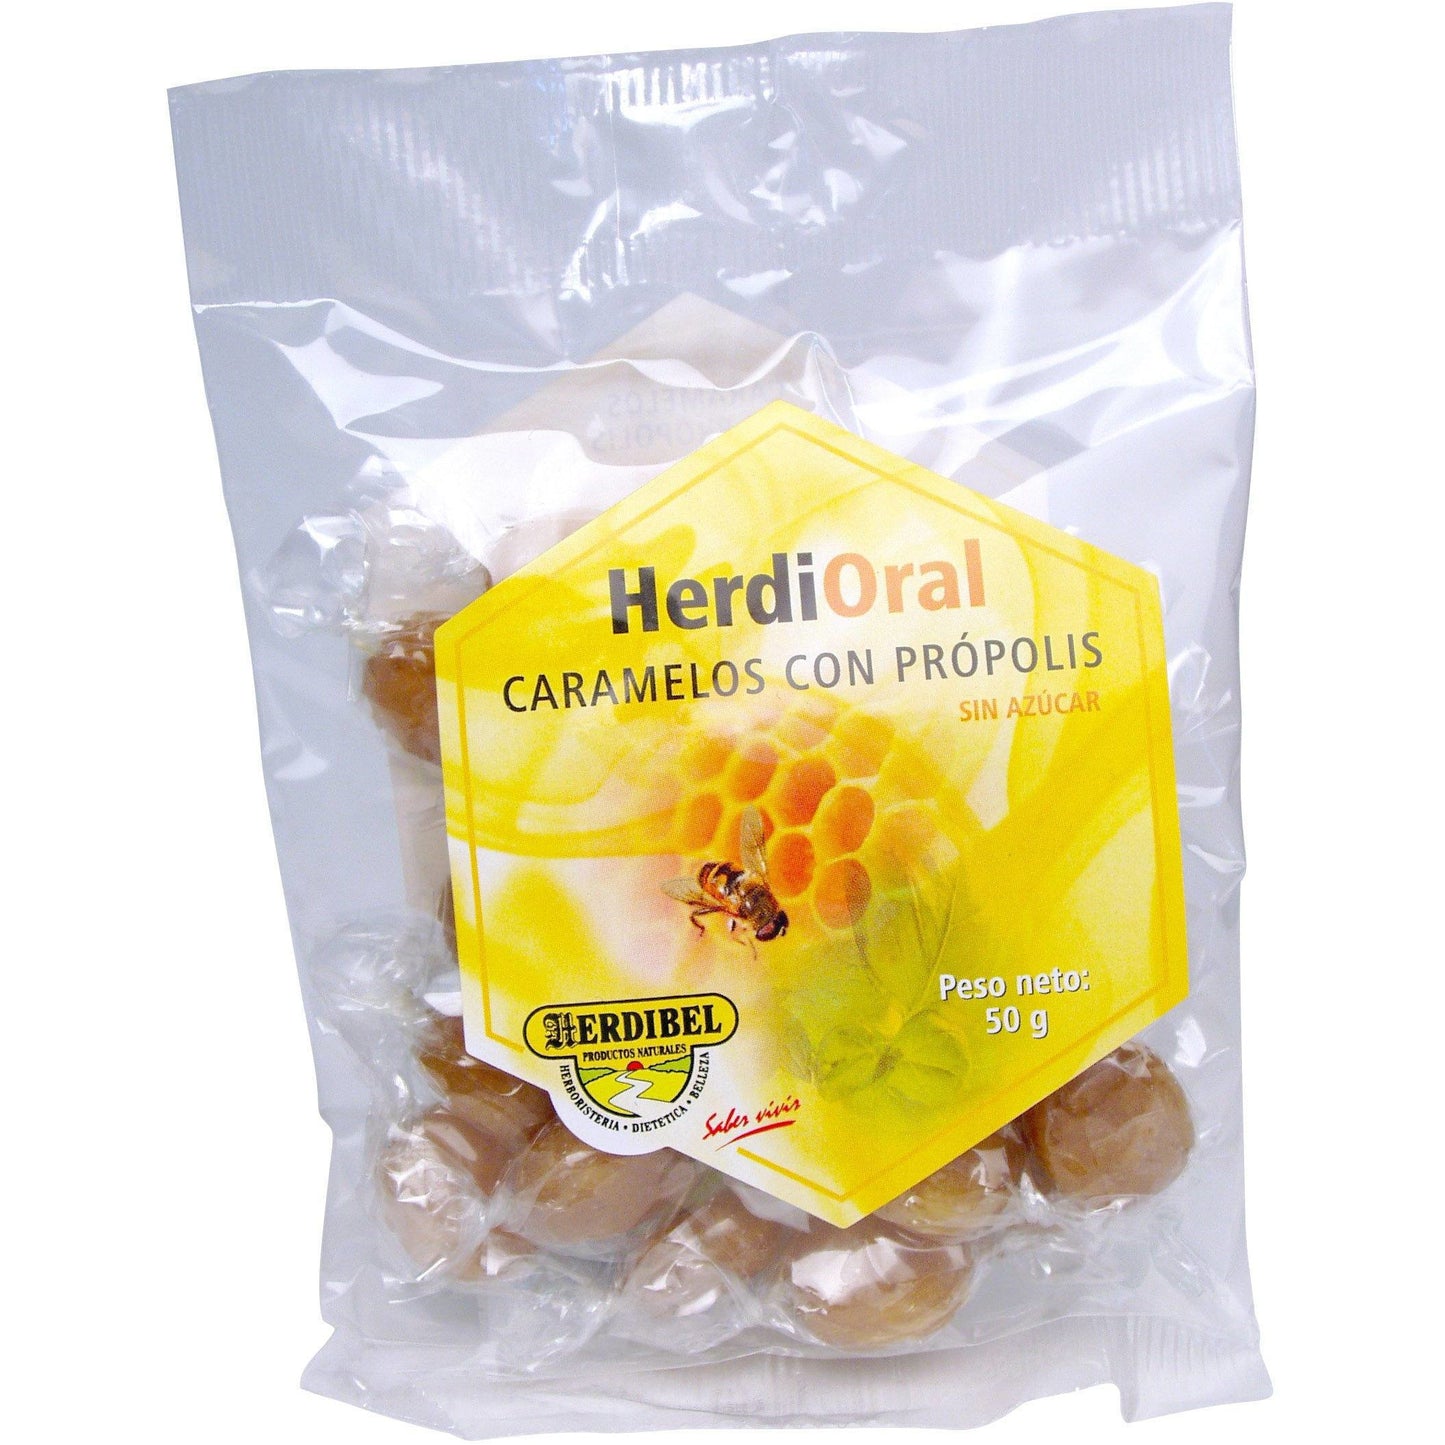 Caramelos Herdioral 50 gr | Herdibel - Dietetica Ferrer